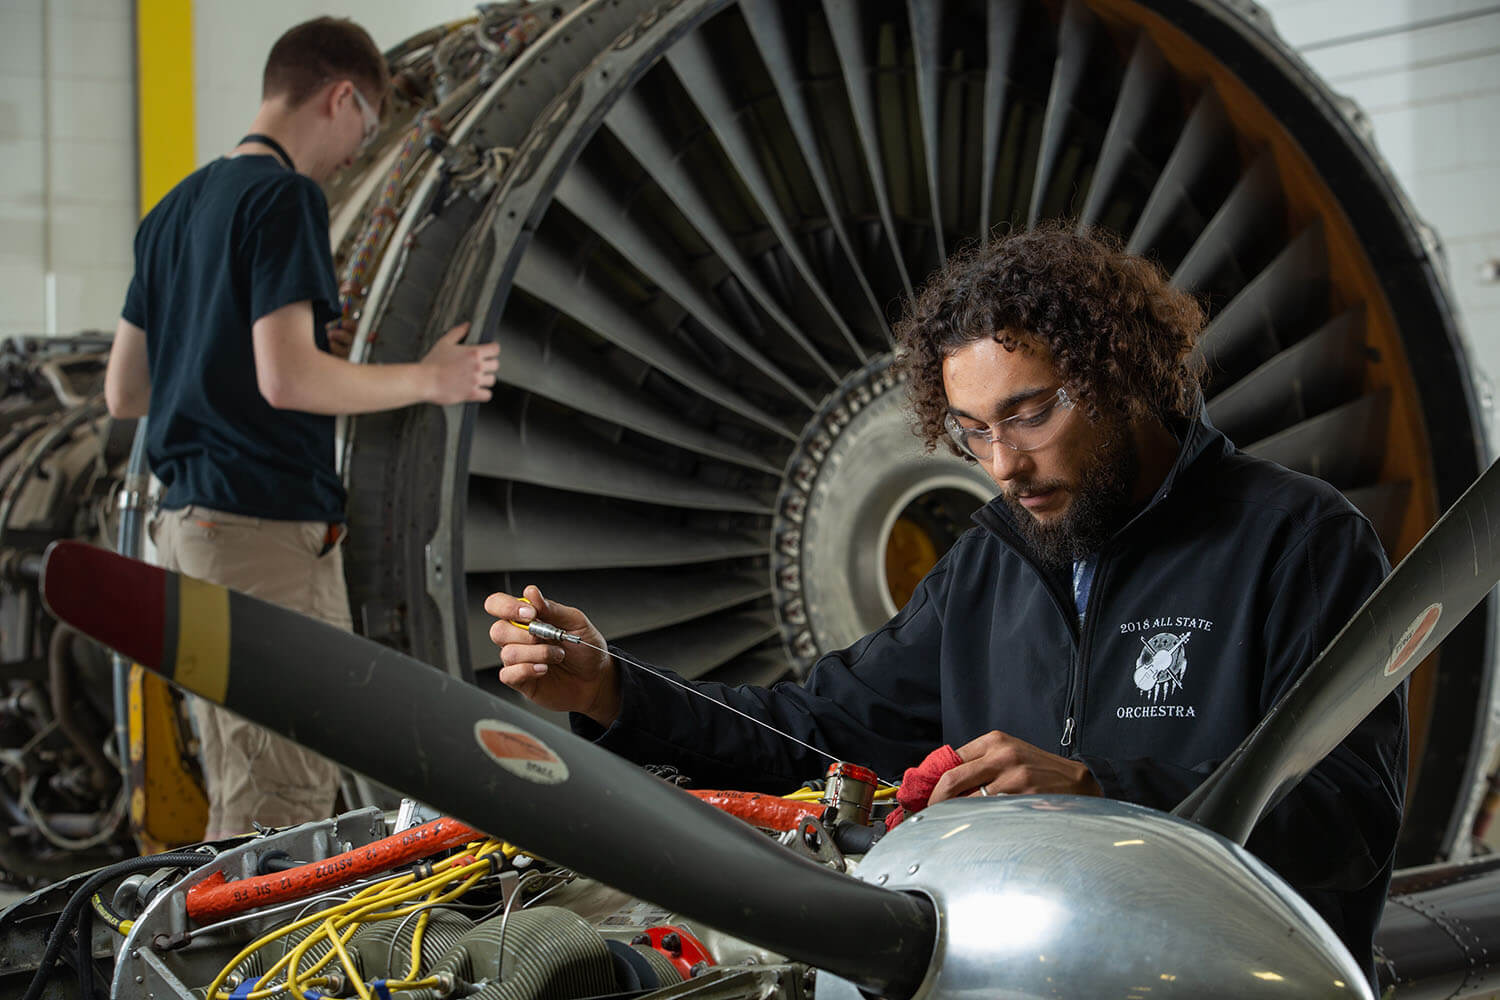 Mechanic working on airplane engine.